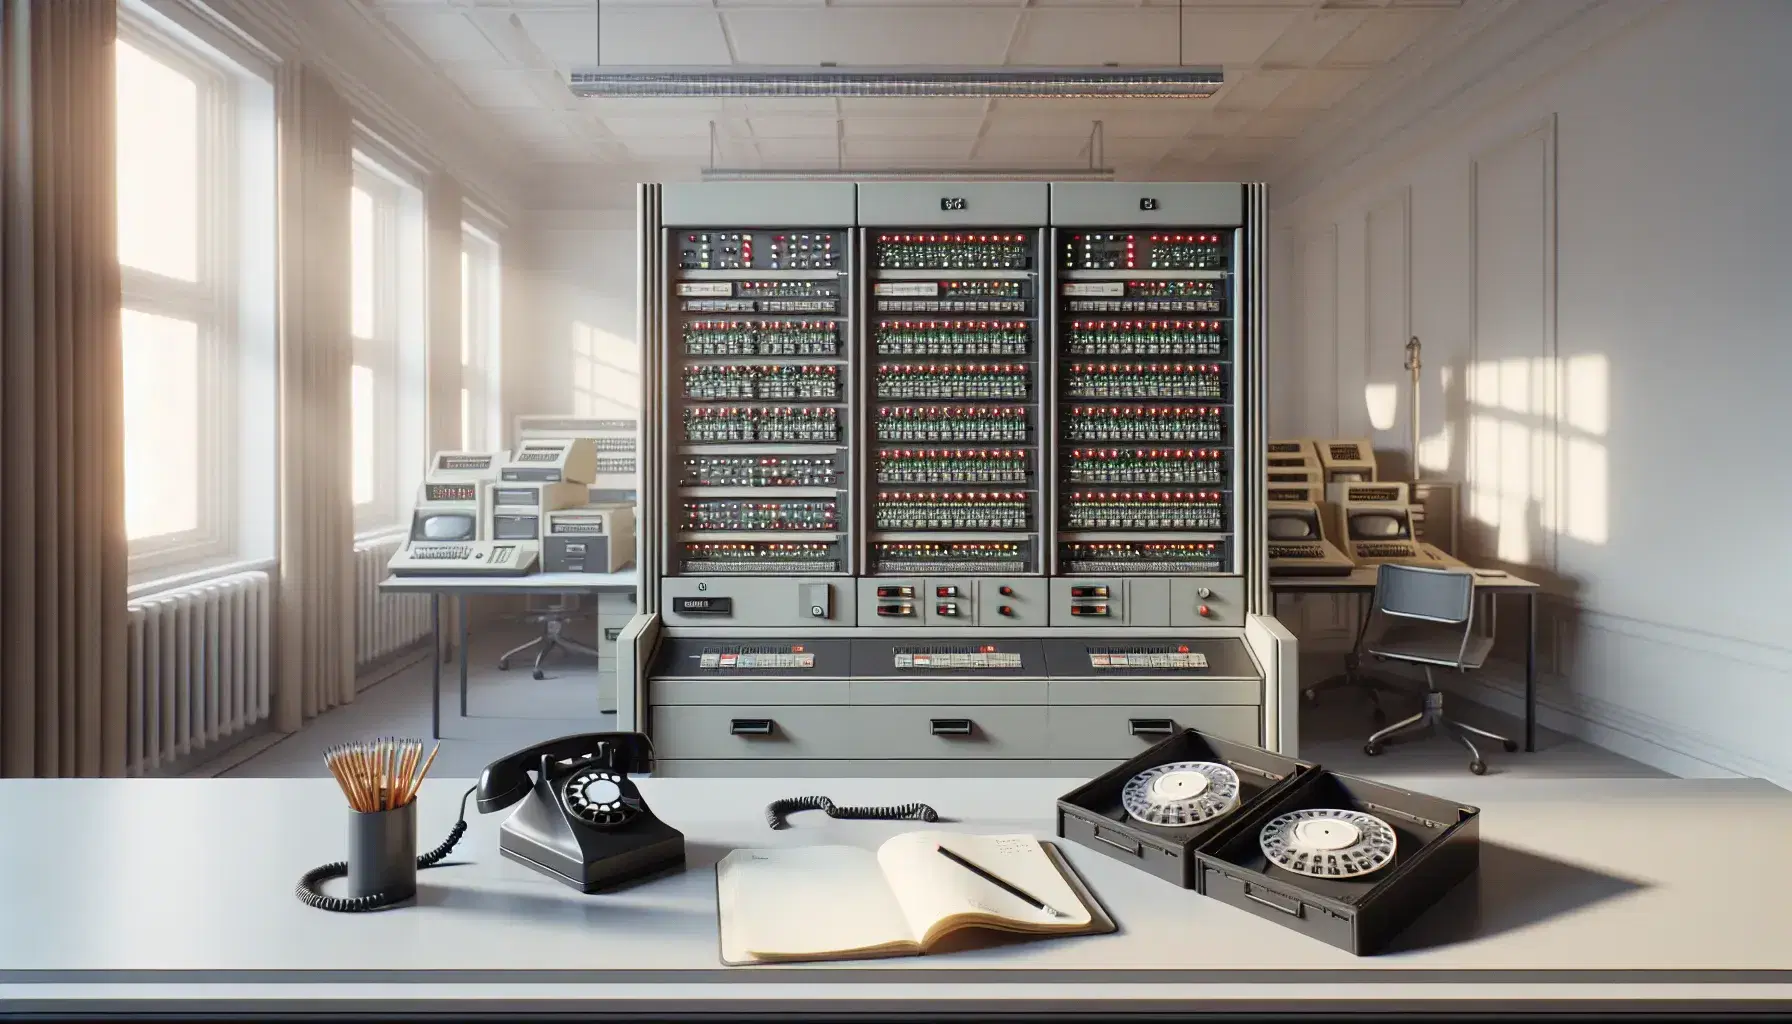 Sala con computadora de primera generación, paneles grises, luces indicadoras, cintas magnéticas, mesa con teléfono antiguo y silla de oficina vacía.